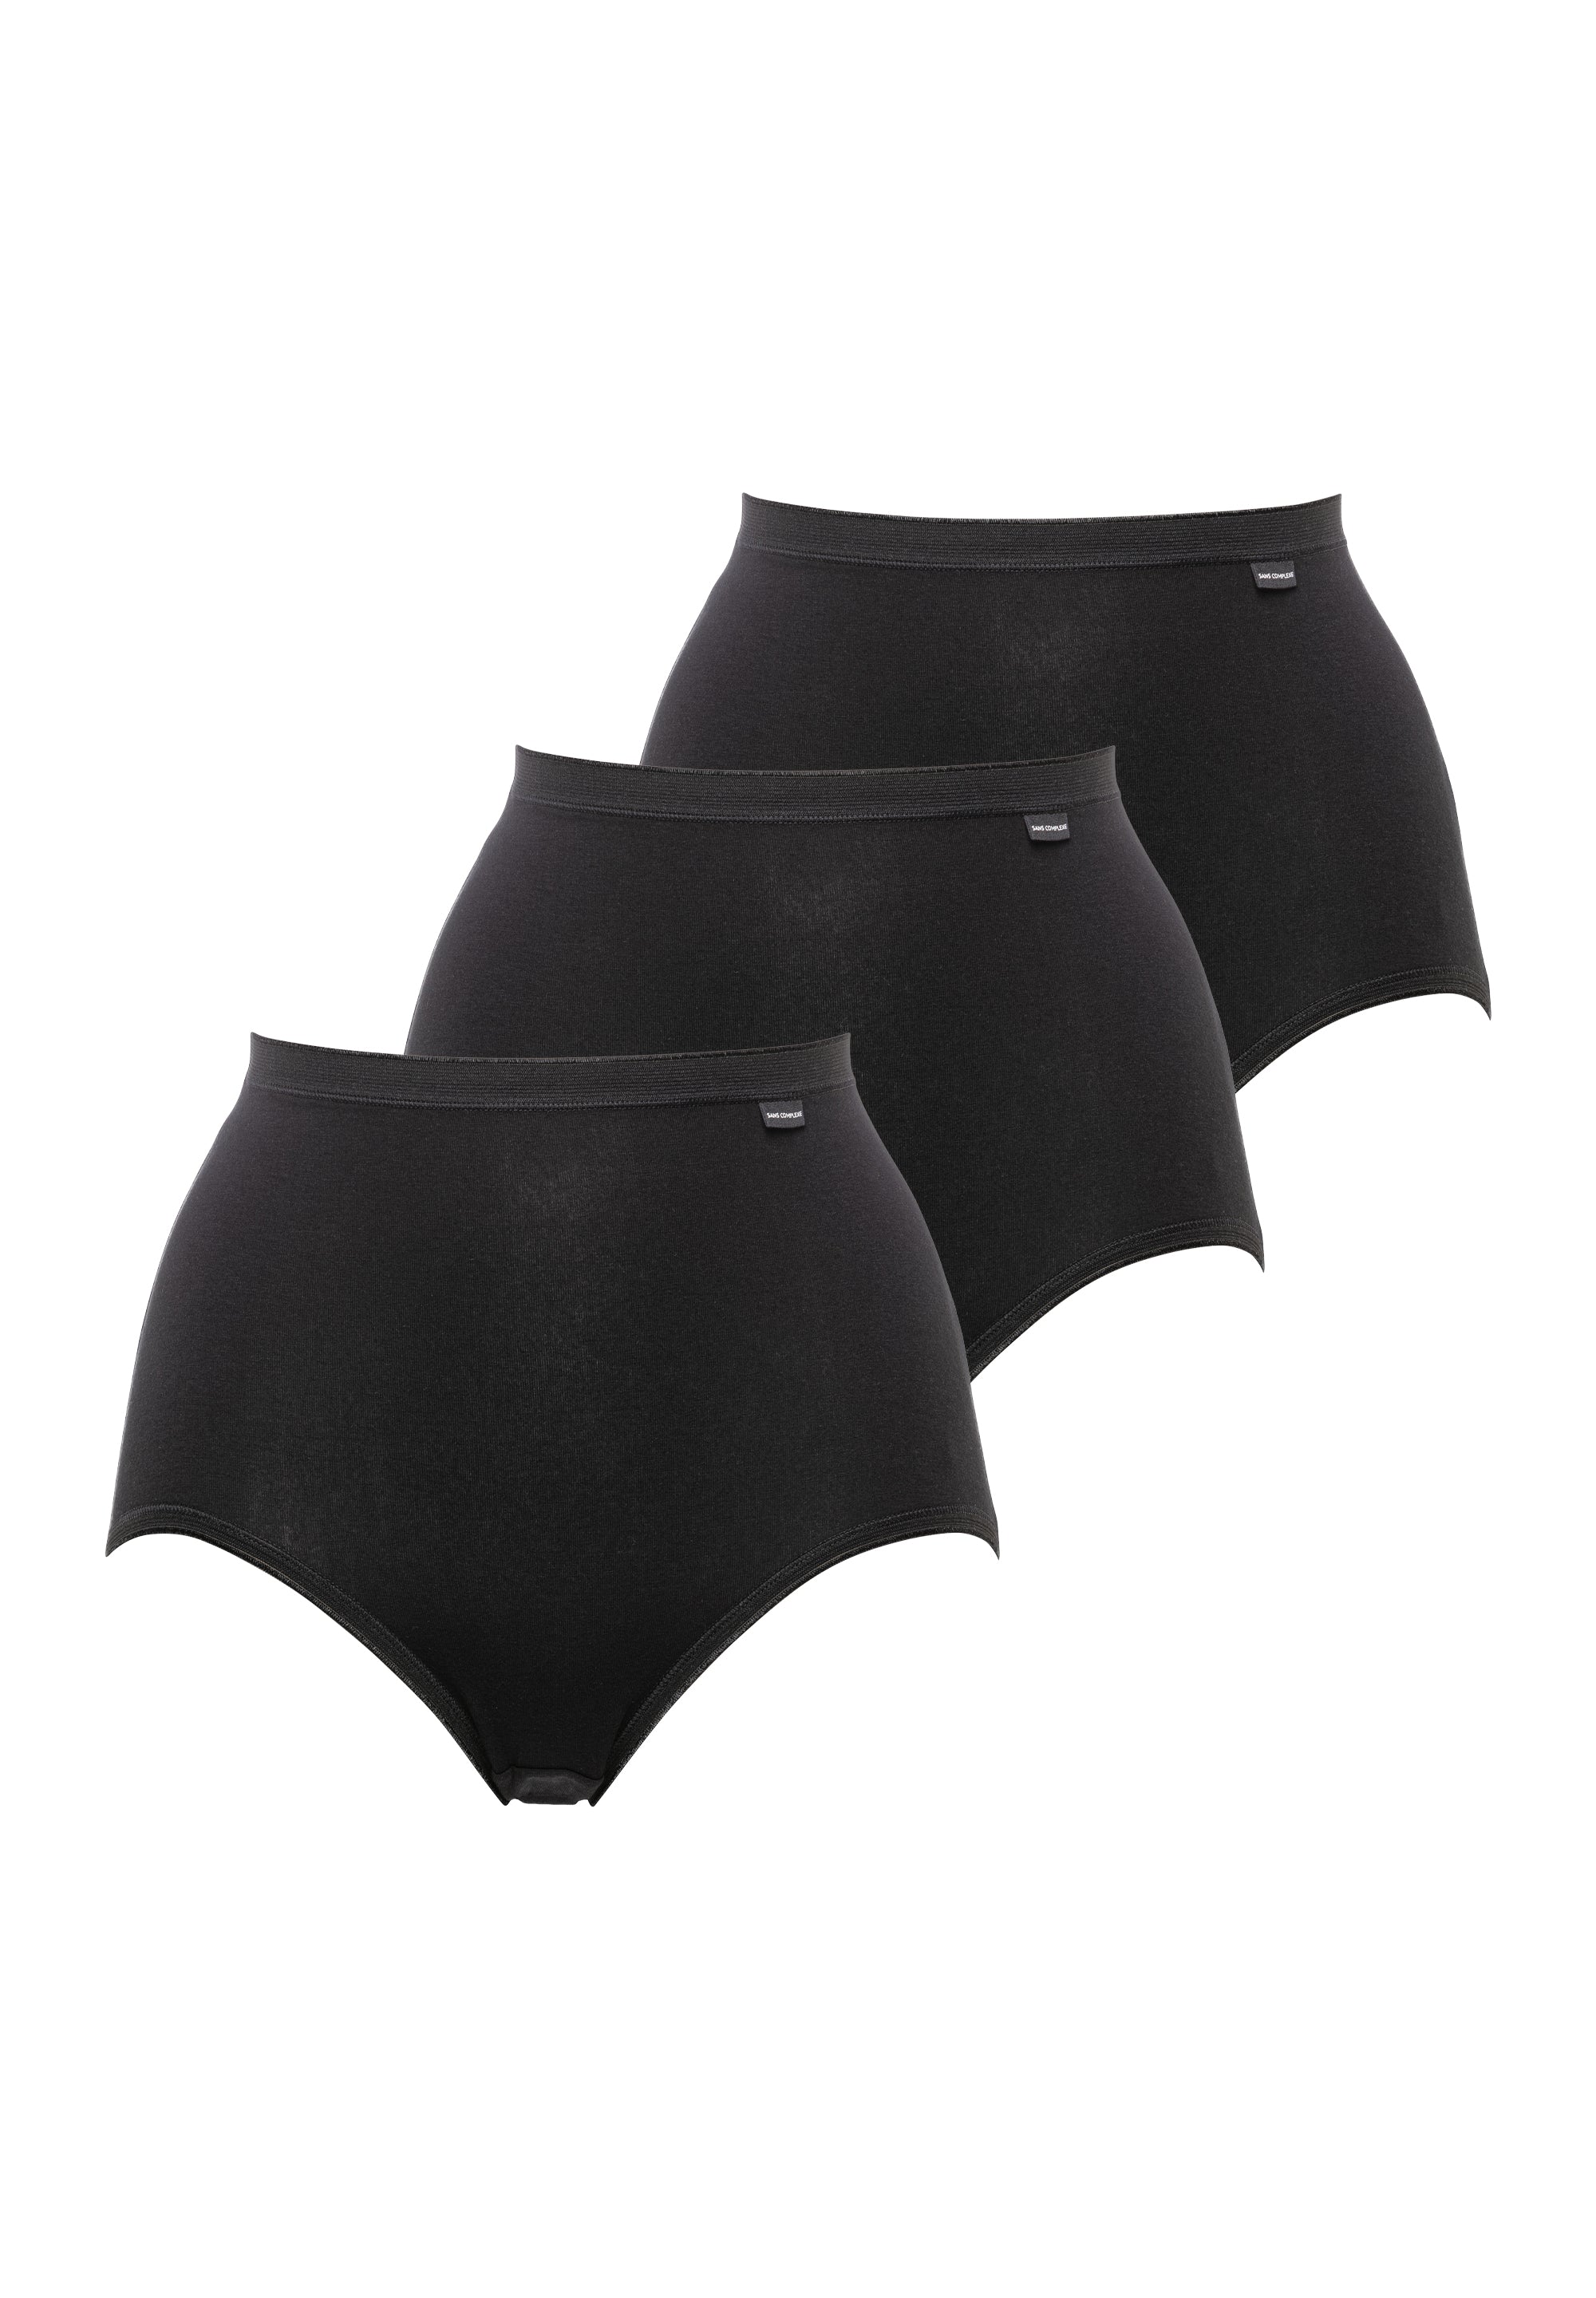 Panties - Pack of 3 Simply Cotton B Black